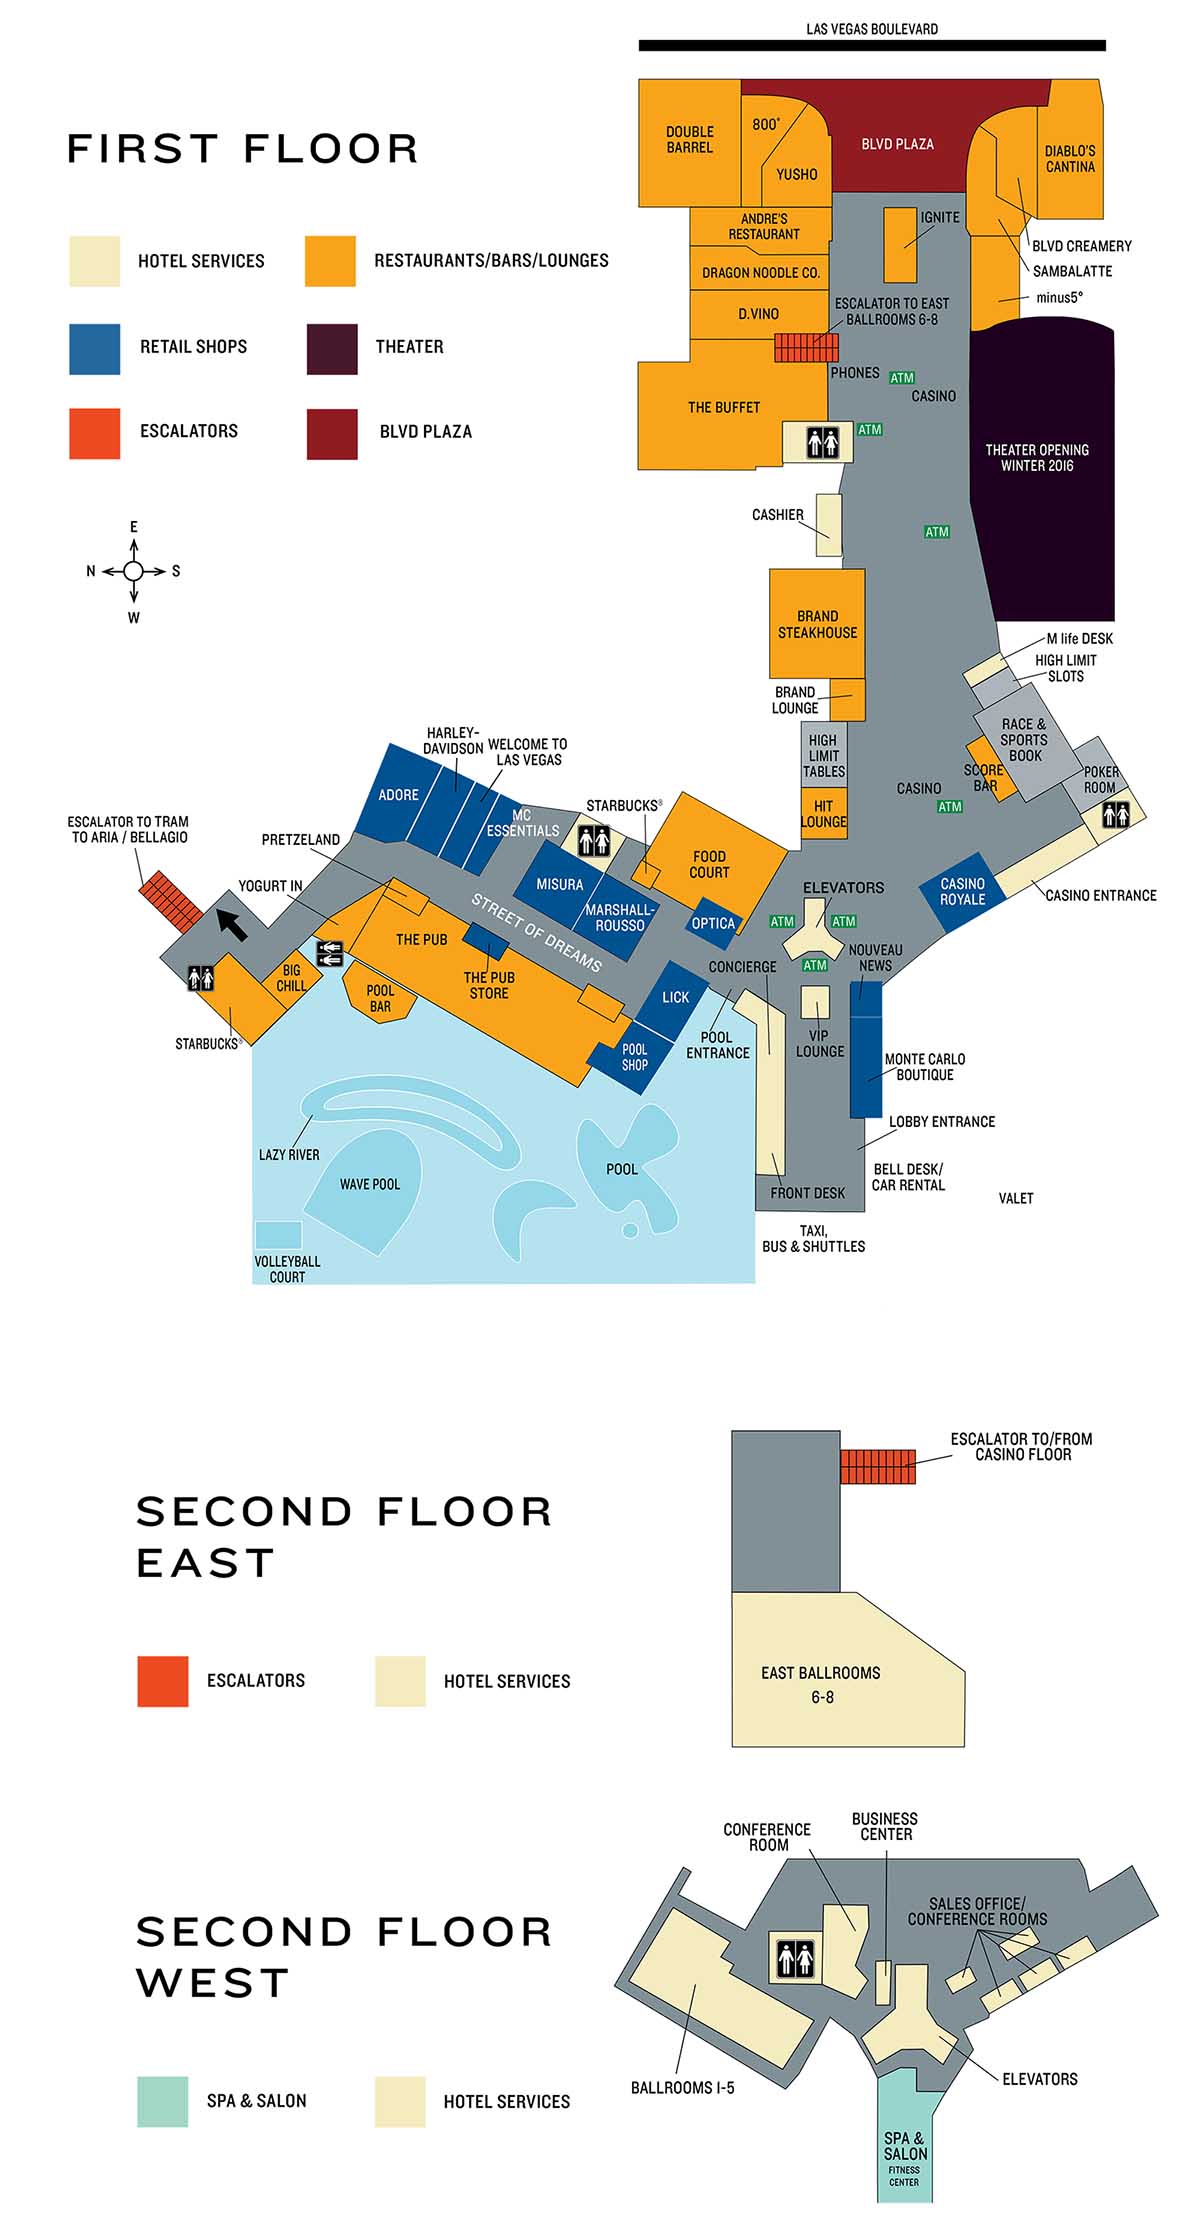 Monte Carlo Casino Property Map & Floor Plans Las Vegas